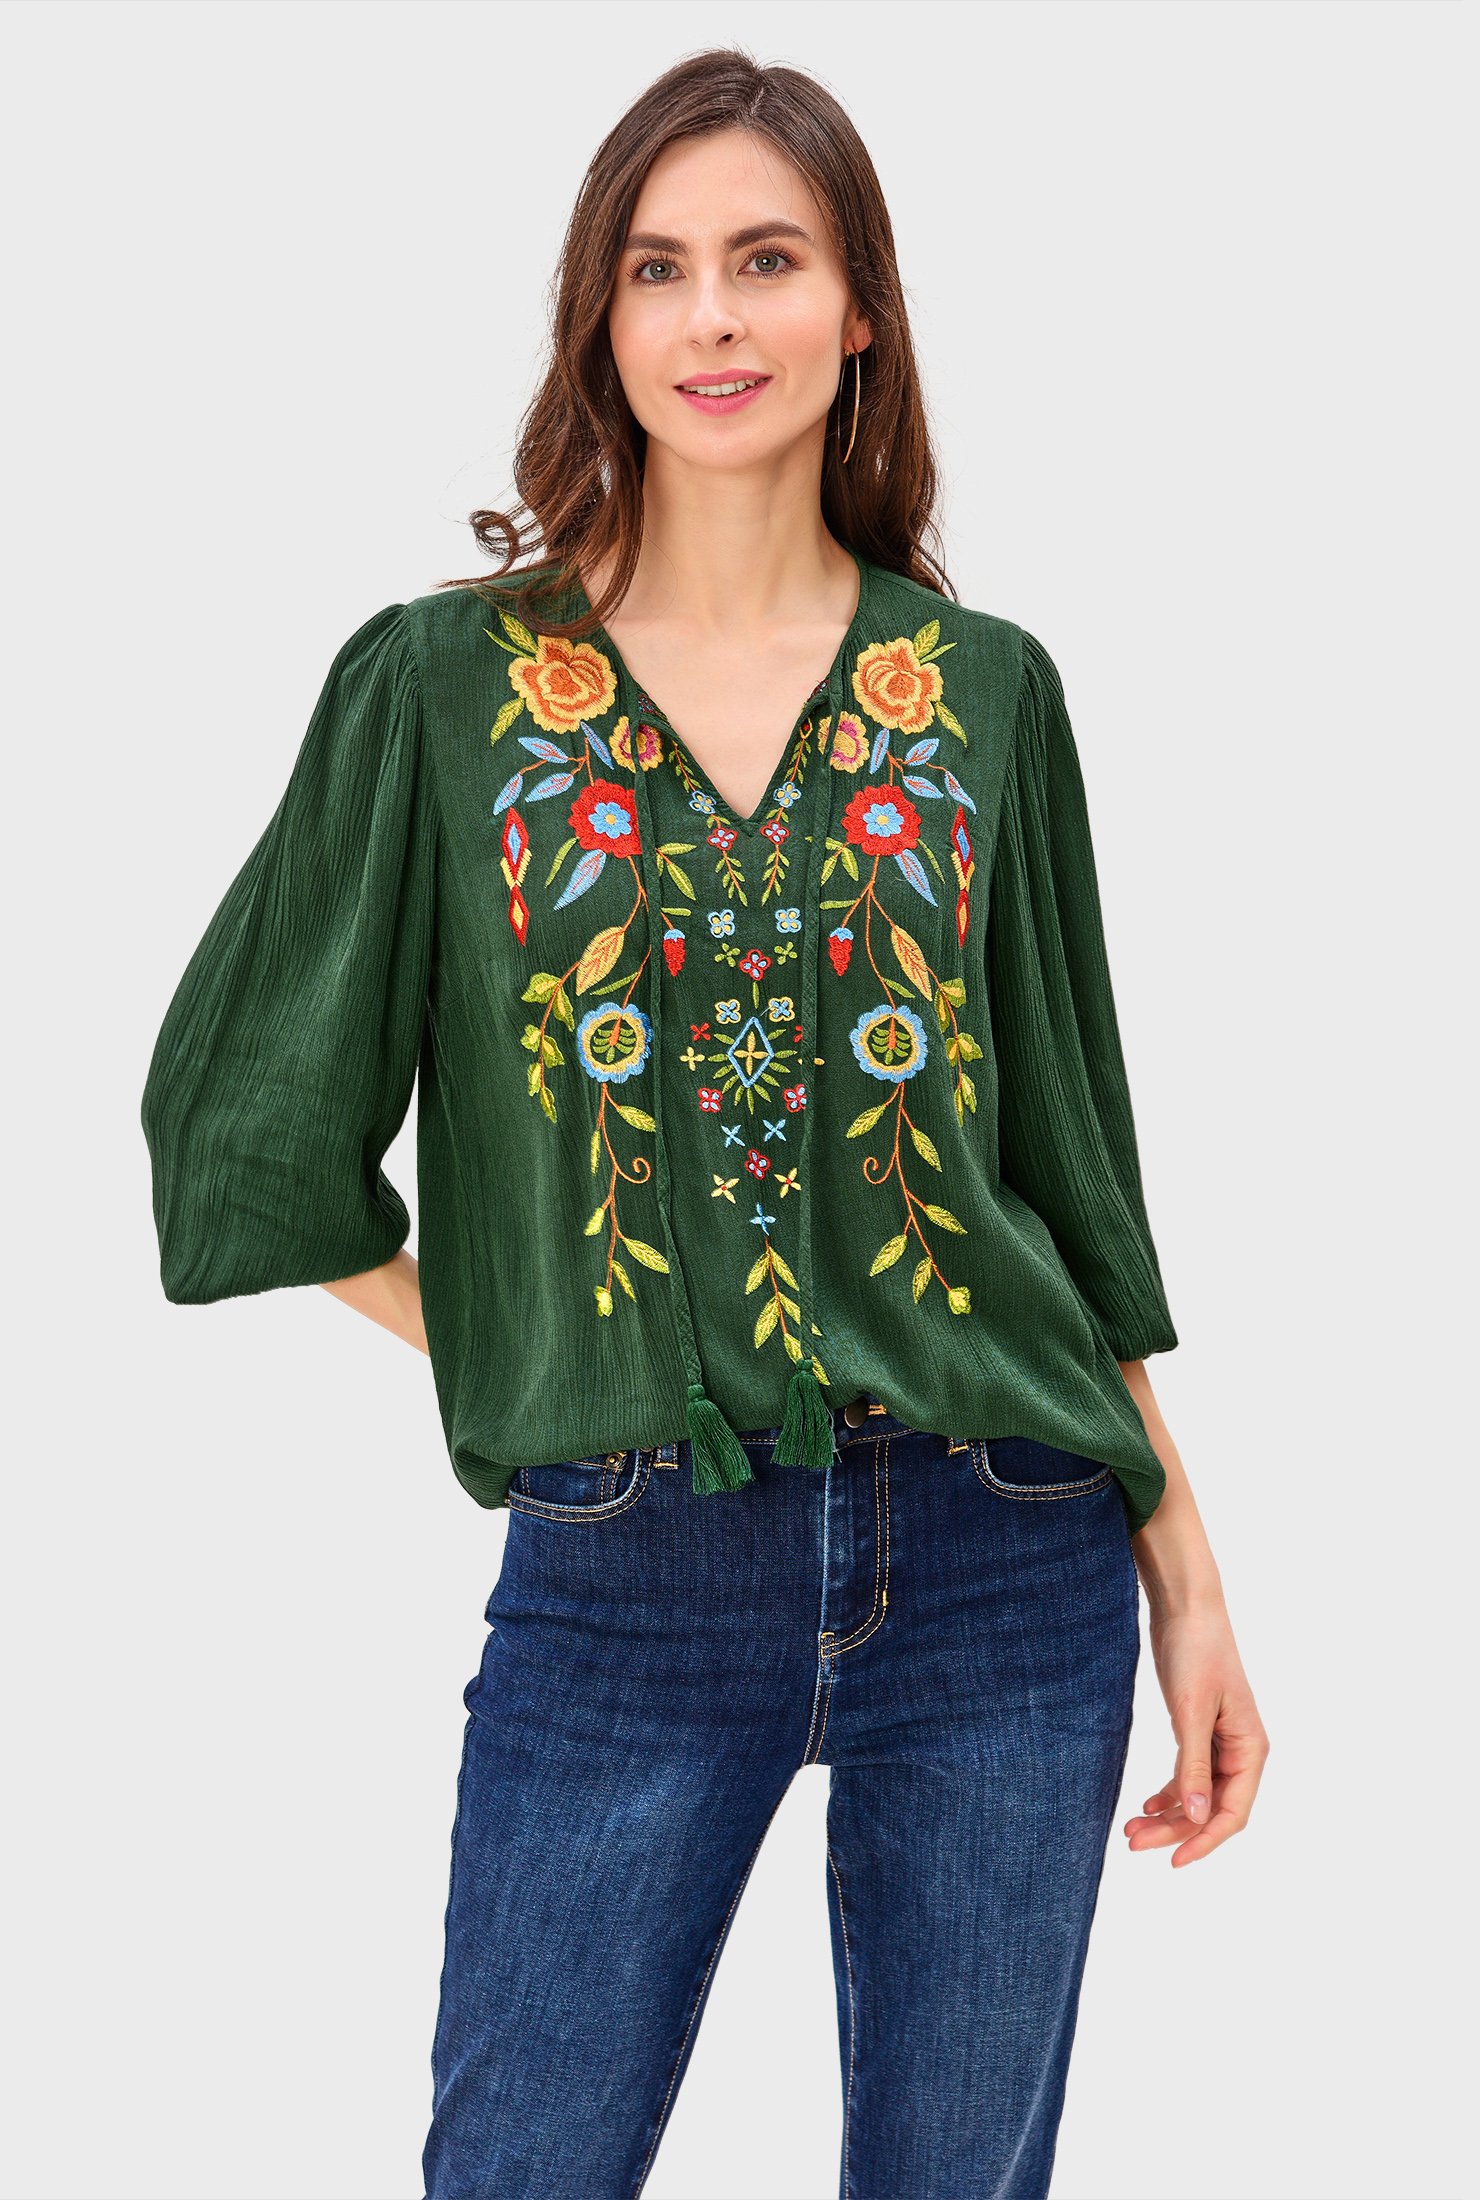 Shop Floral embroidery rayon crinkle tassel tie tunic | eShakti